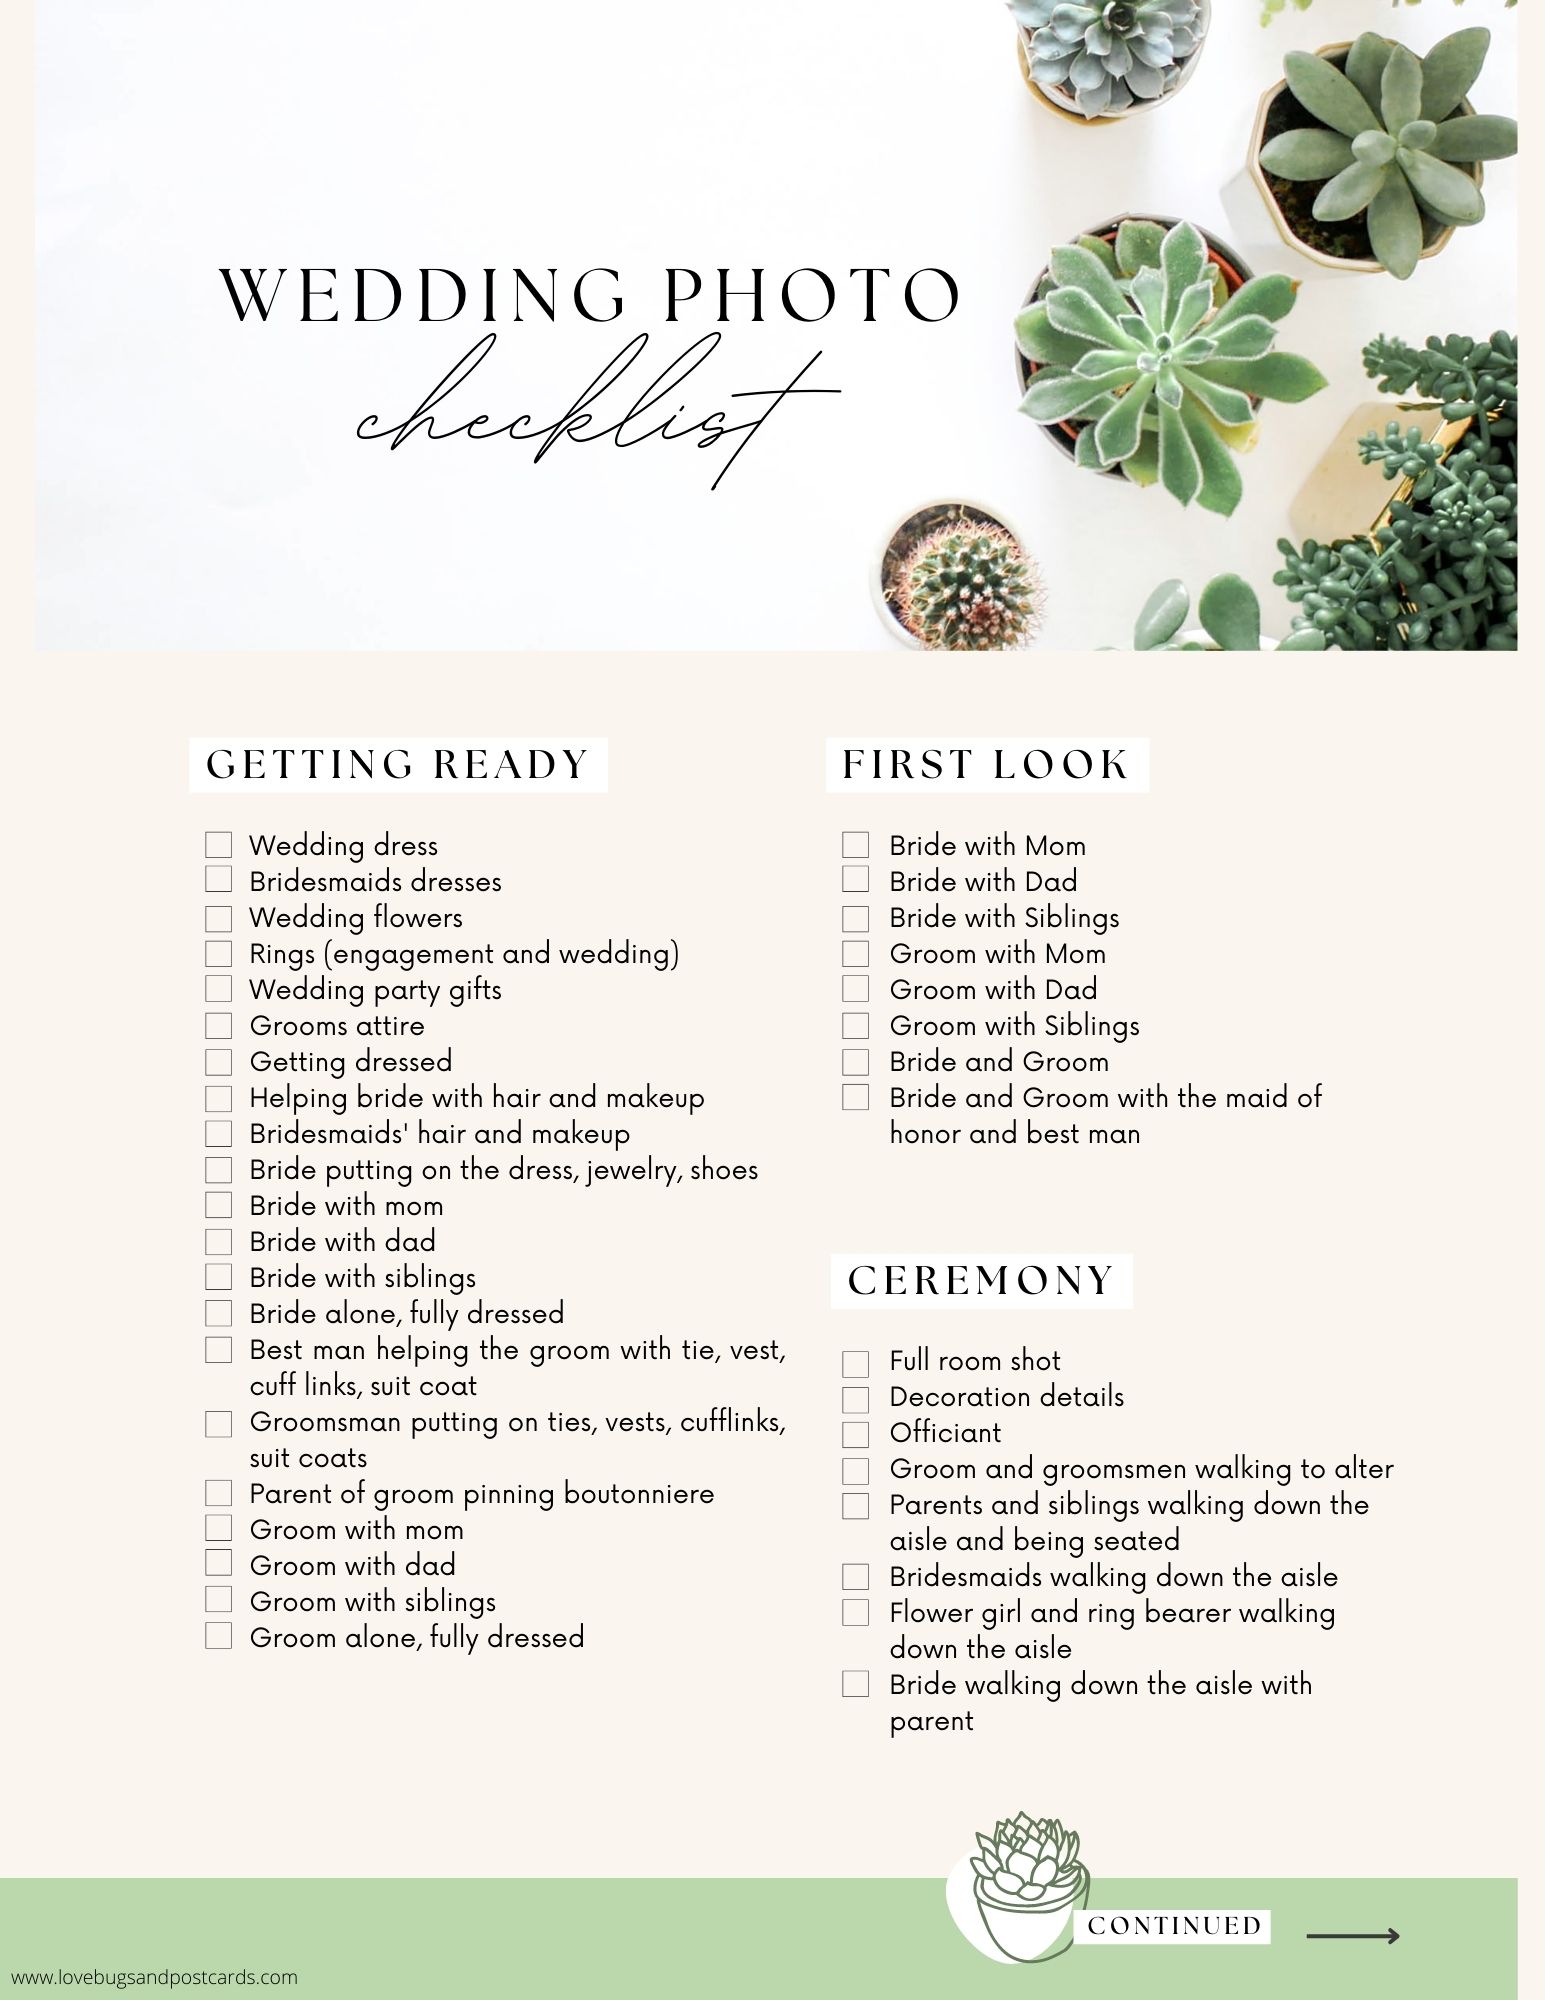 wedding photo checklist printable